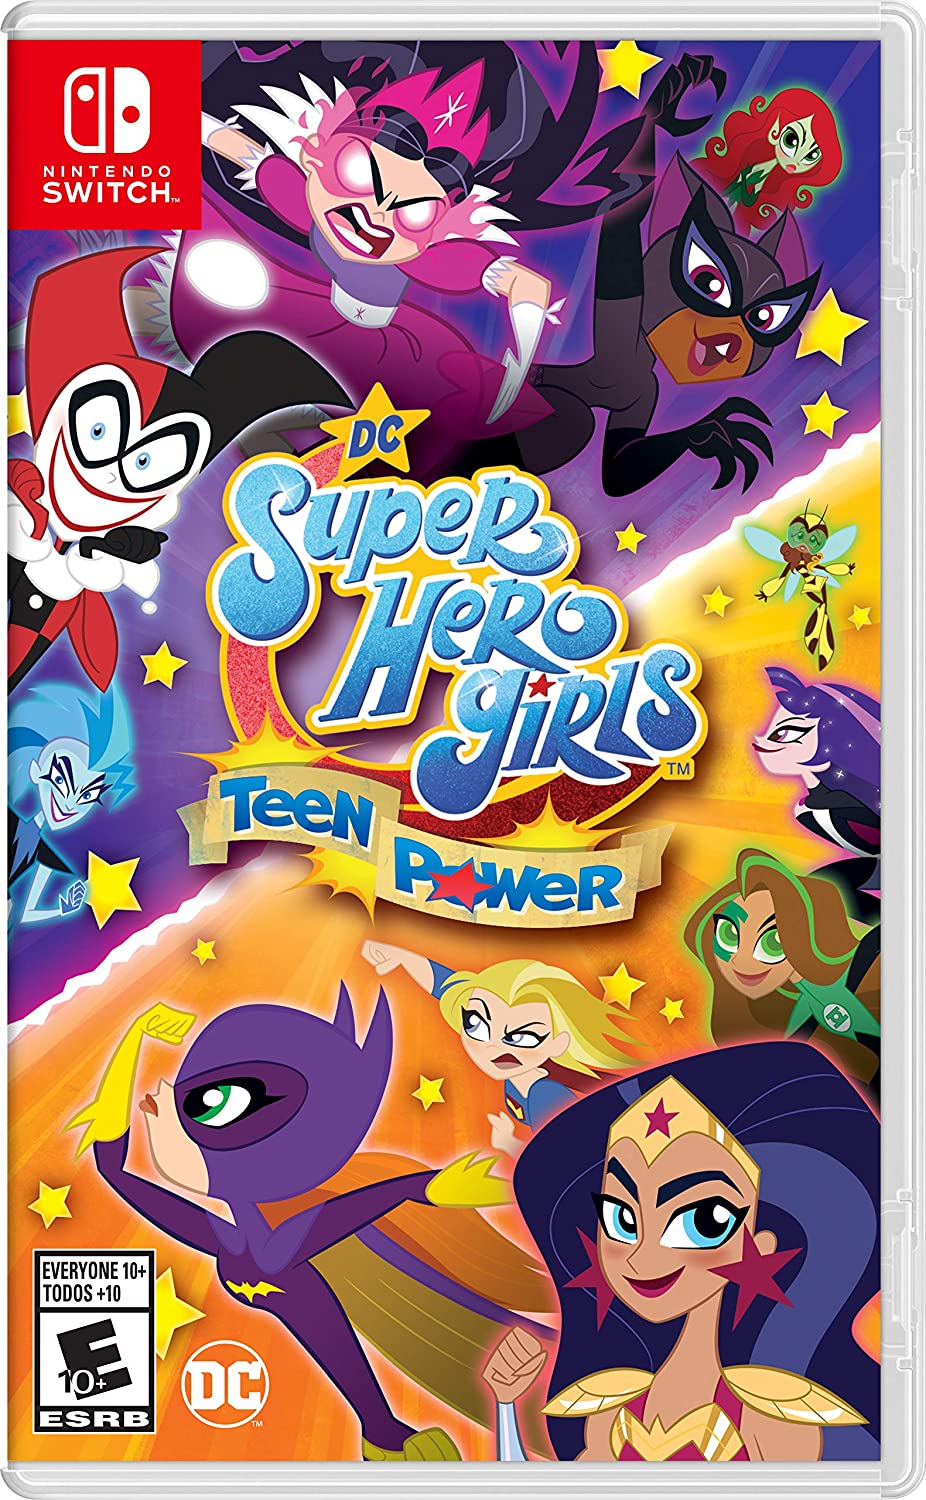 DC Super Hero Girls Teen Power - Nintendo Switch